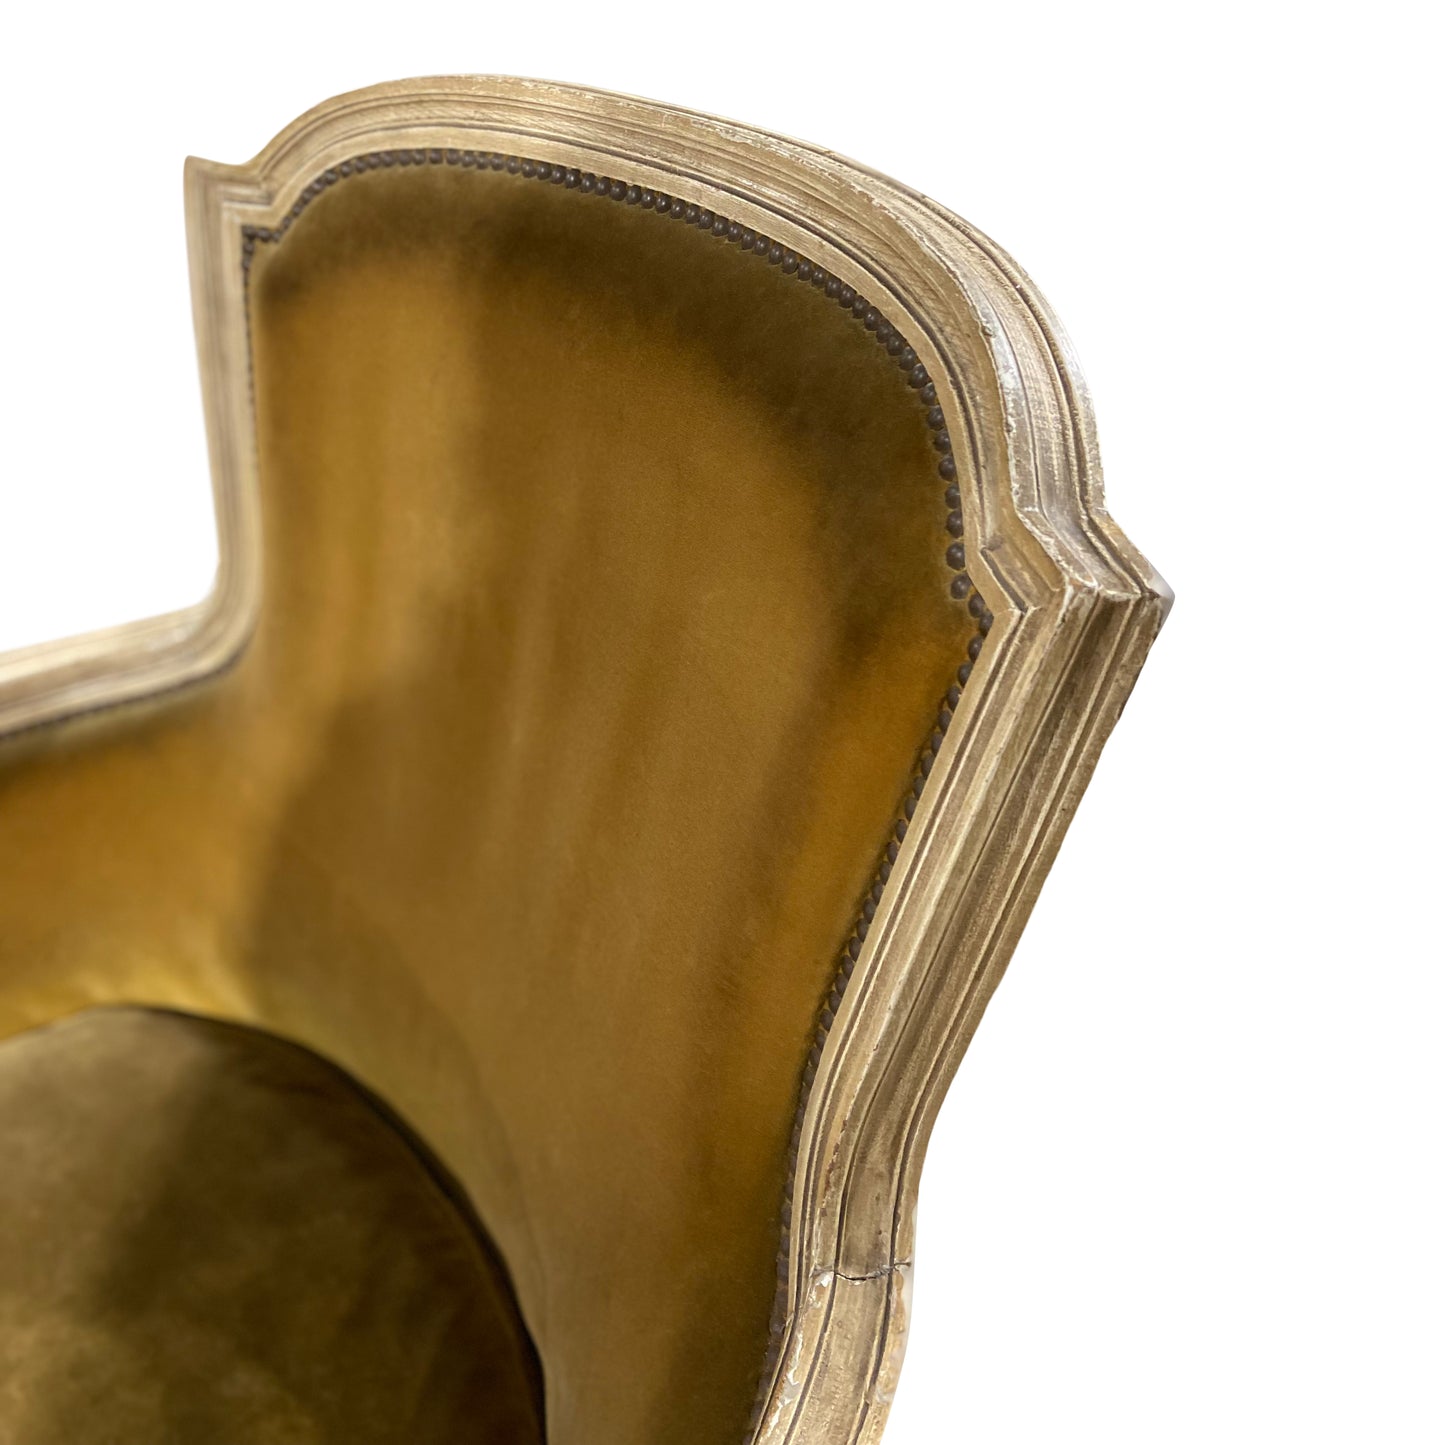 Gold Louis XVI Bergere Chairs